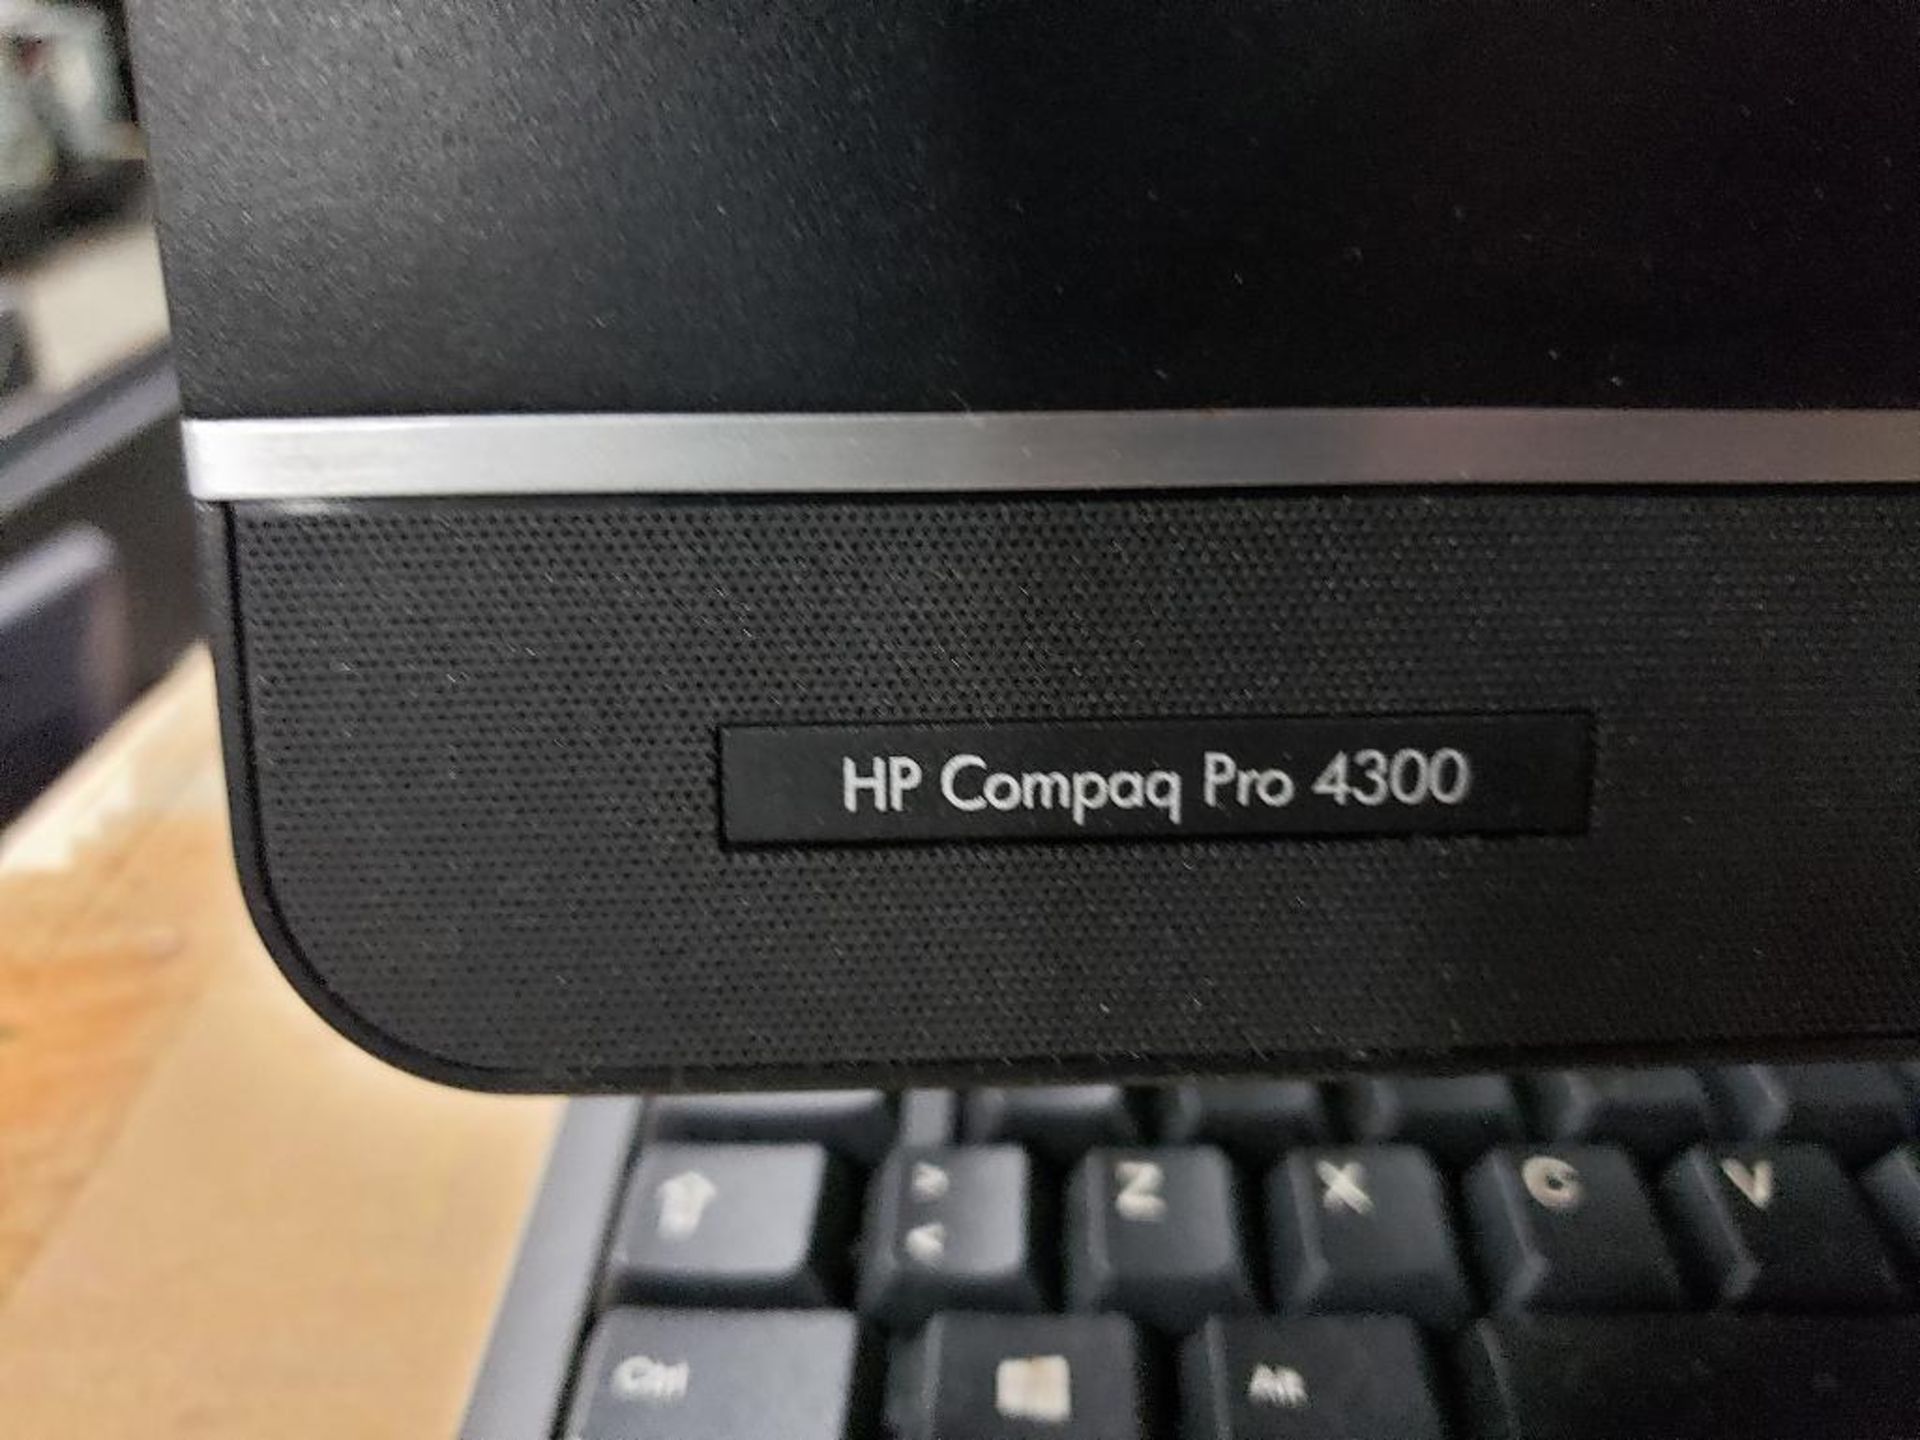 HP Compaq Pro 4300 computer. - Image 2 of 4